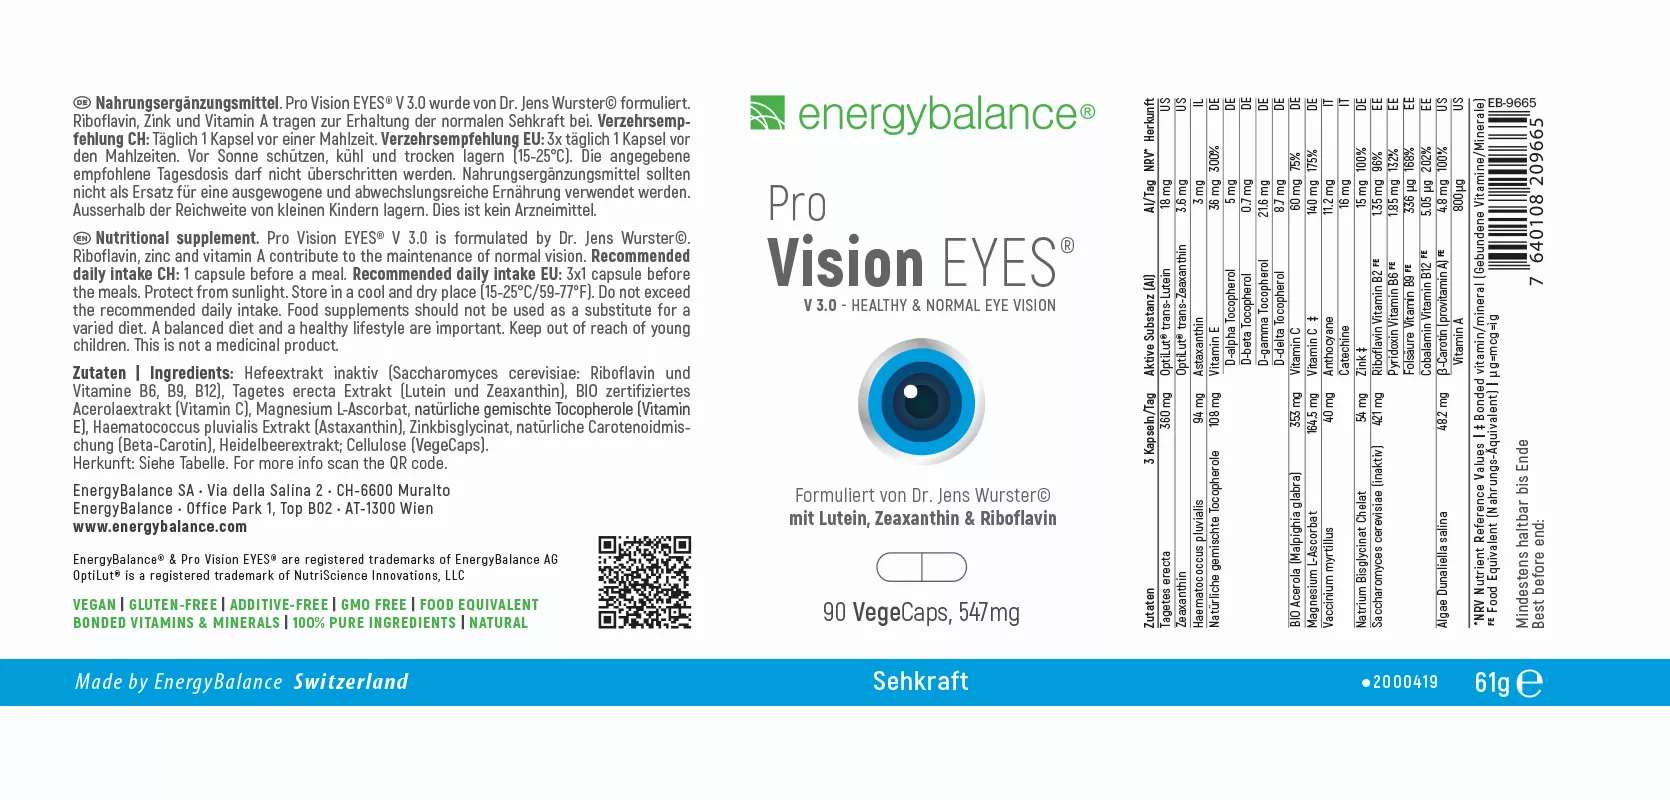 Pro Vision Eyes Etikett von Energybalance